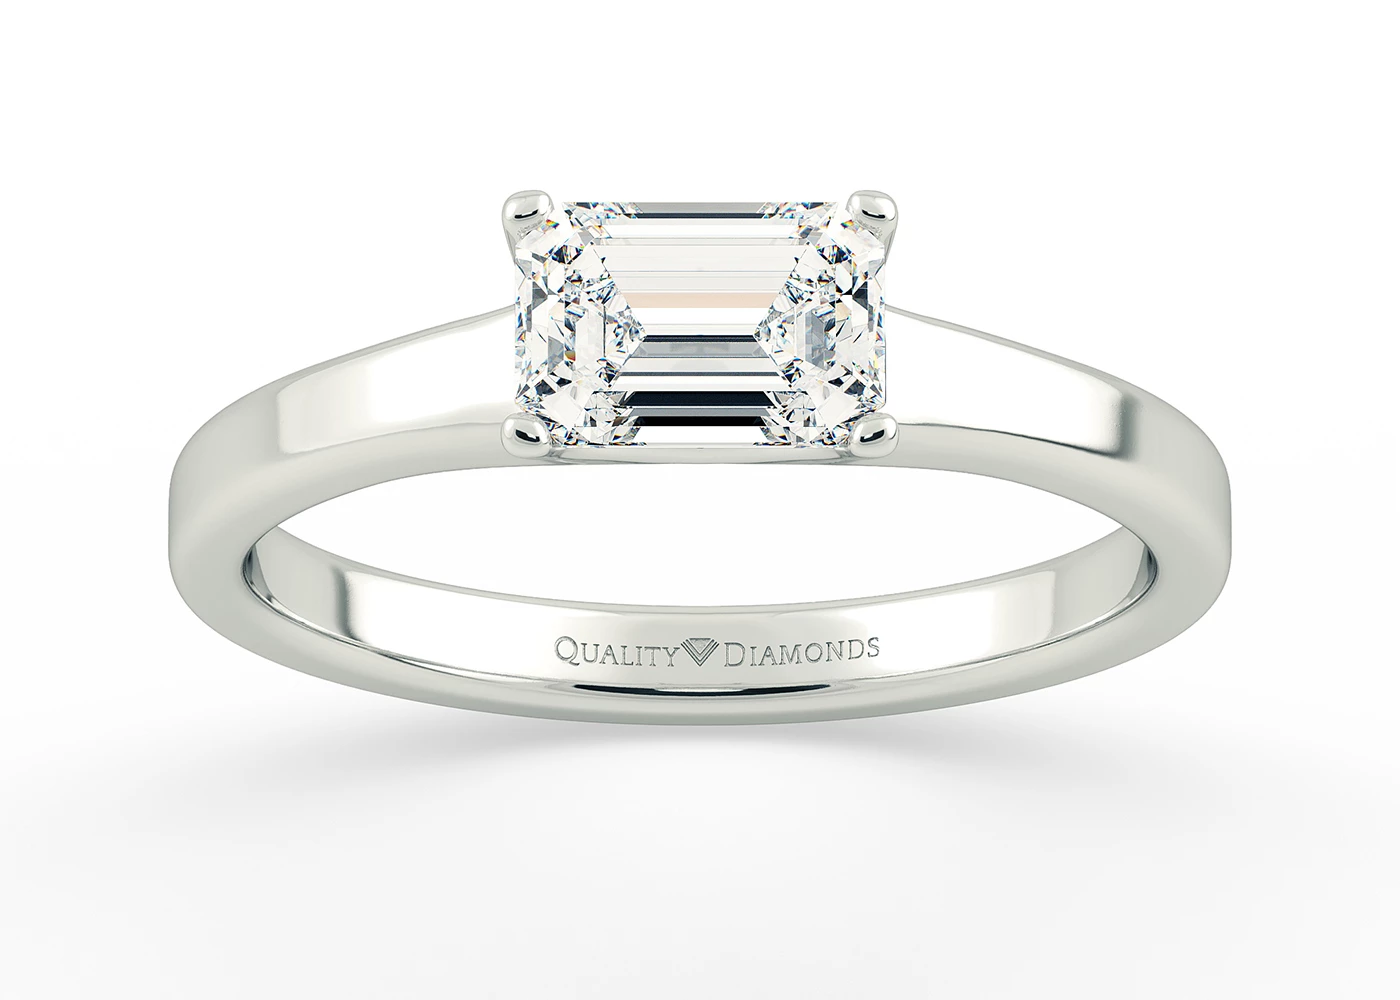 Emerald Felicita Diamond Ring in 9K White Gold